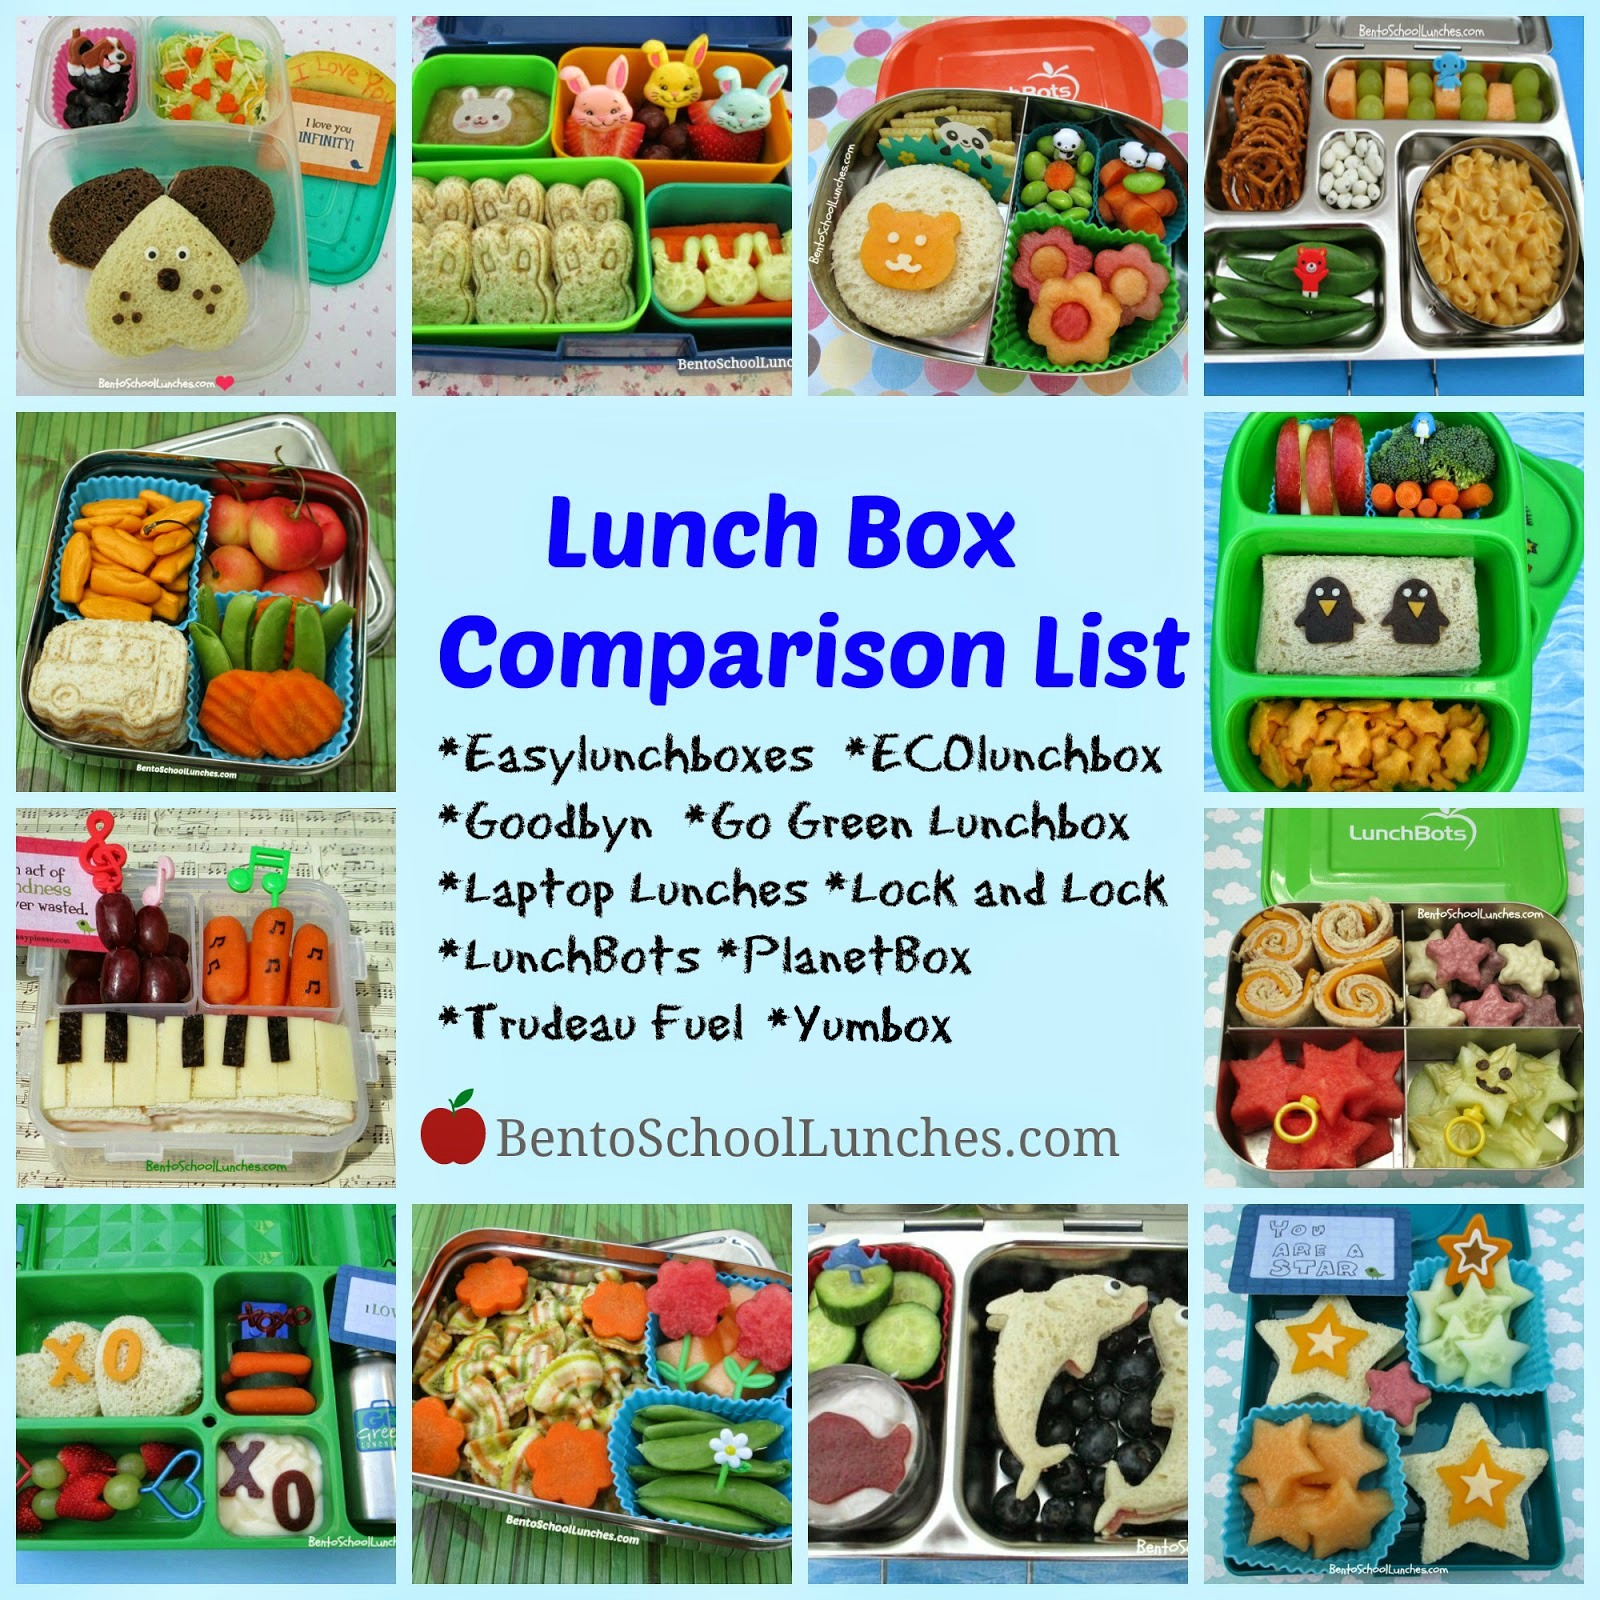 Bento School Lunches : Lunch Box Comparison List